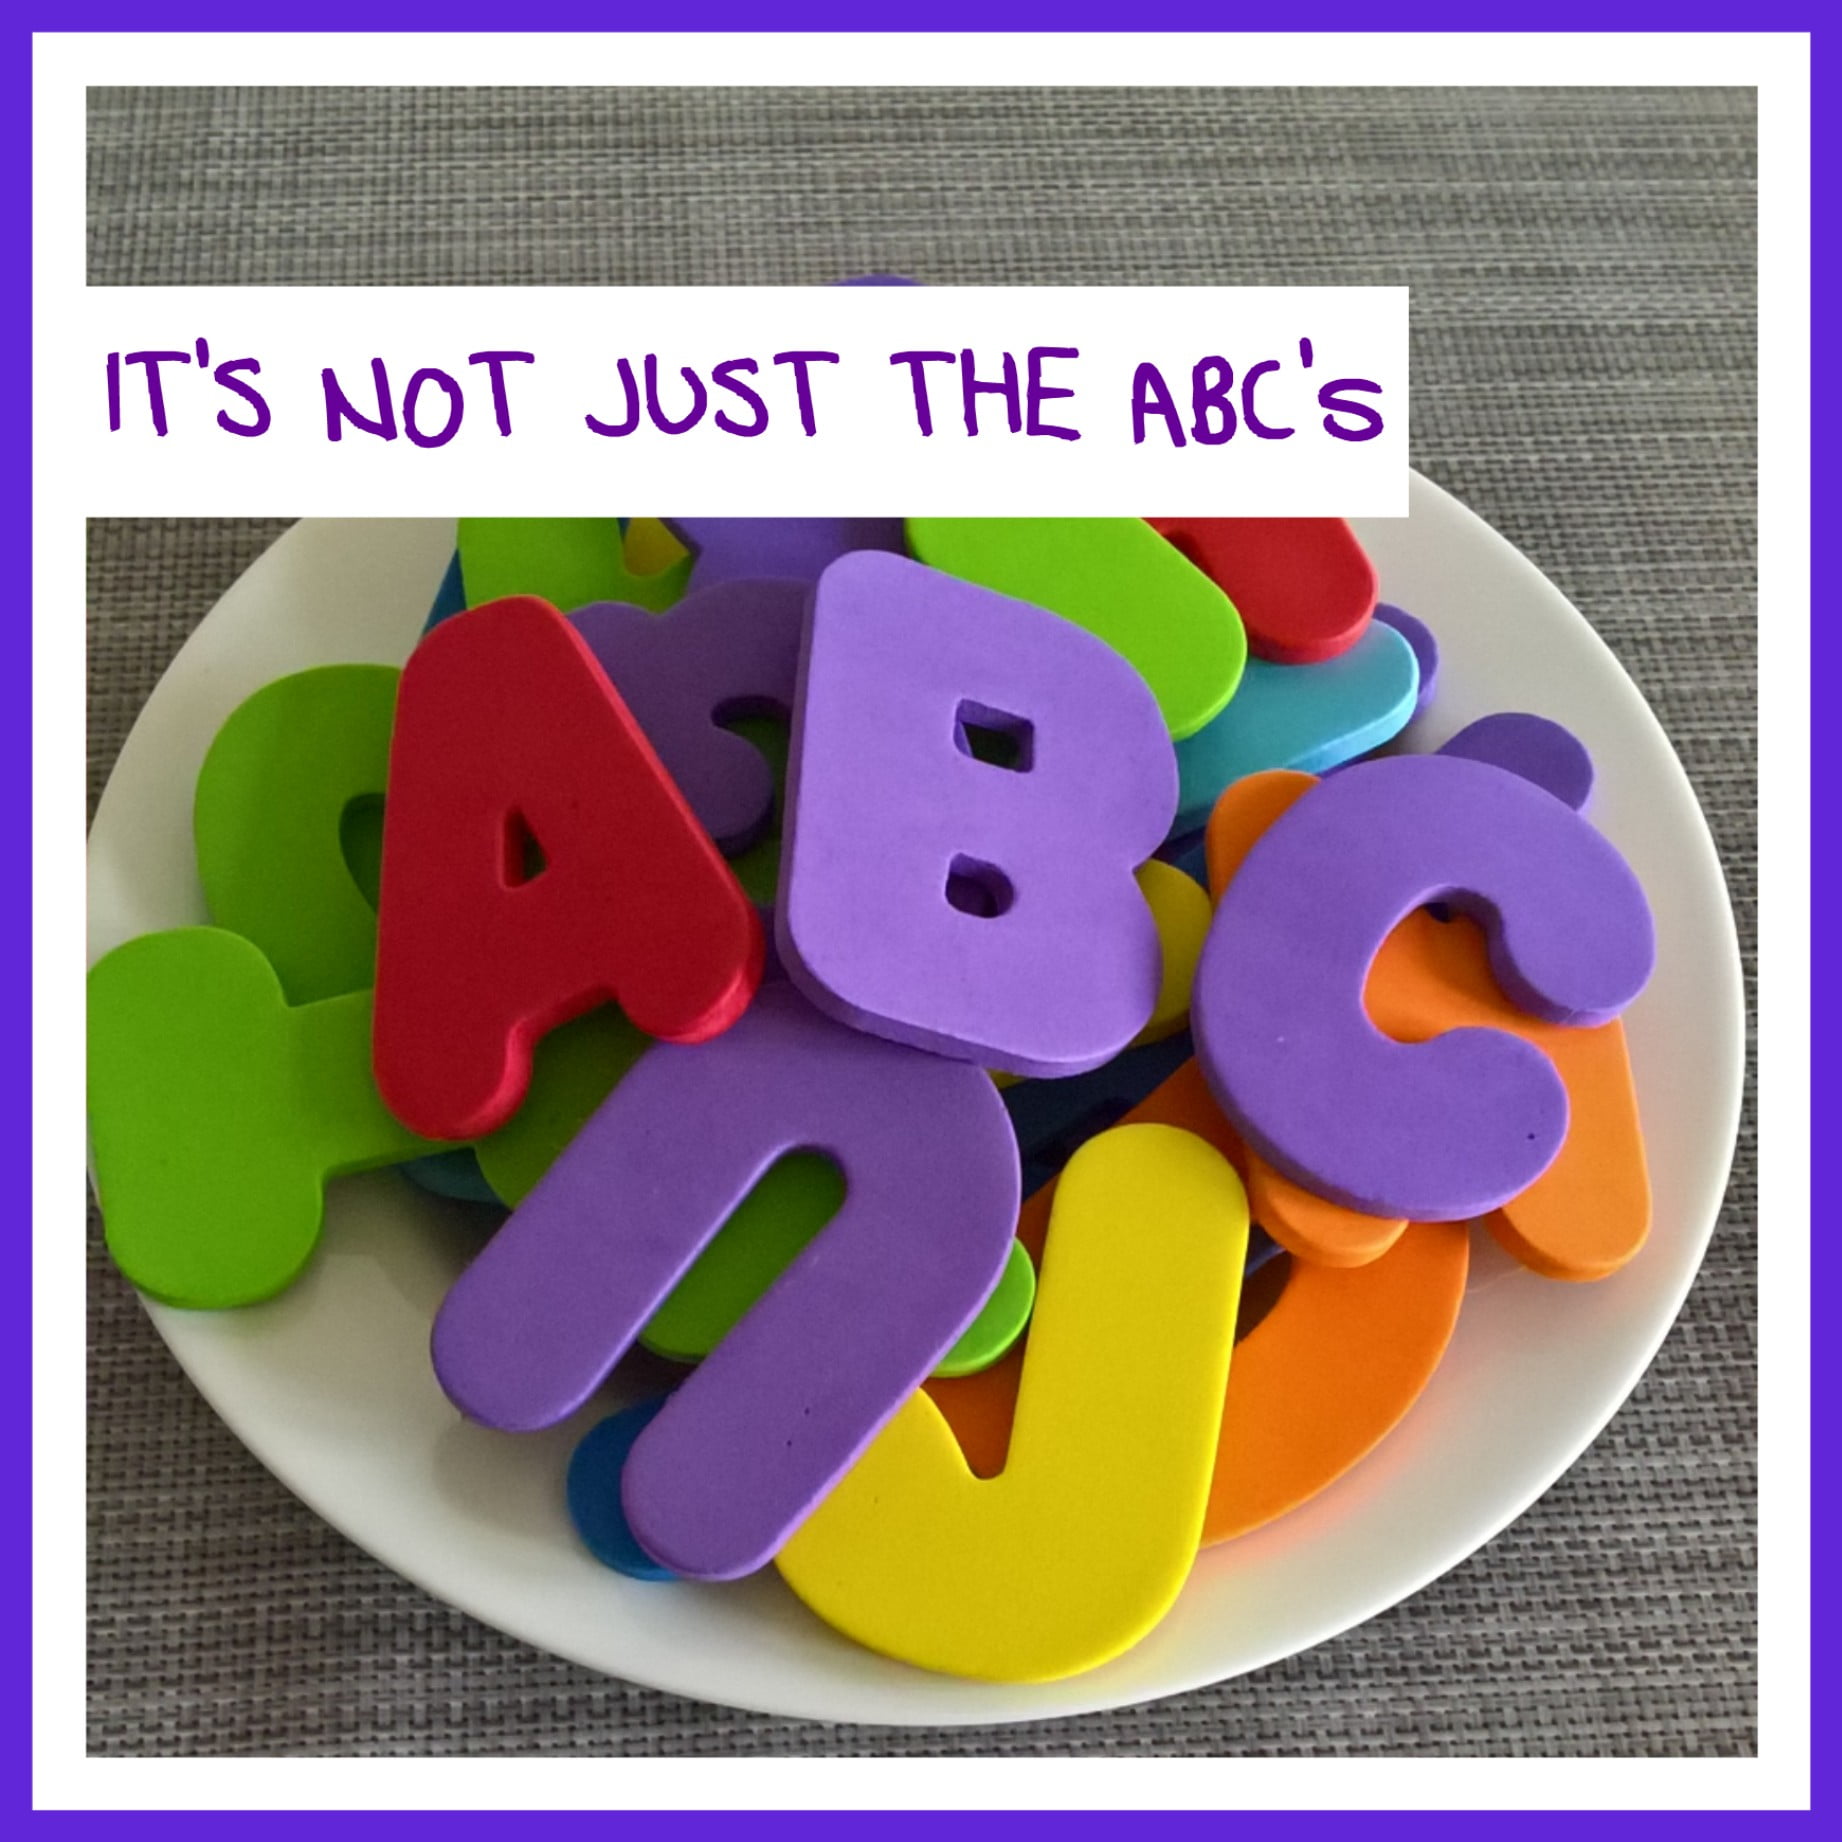 THE ABC's